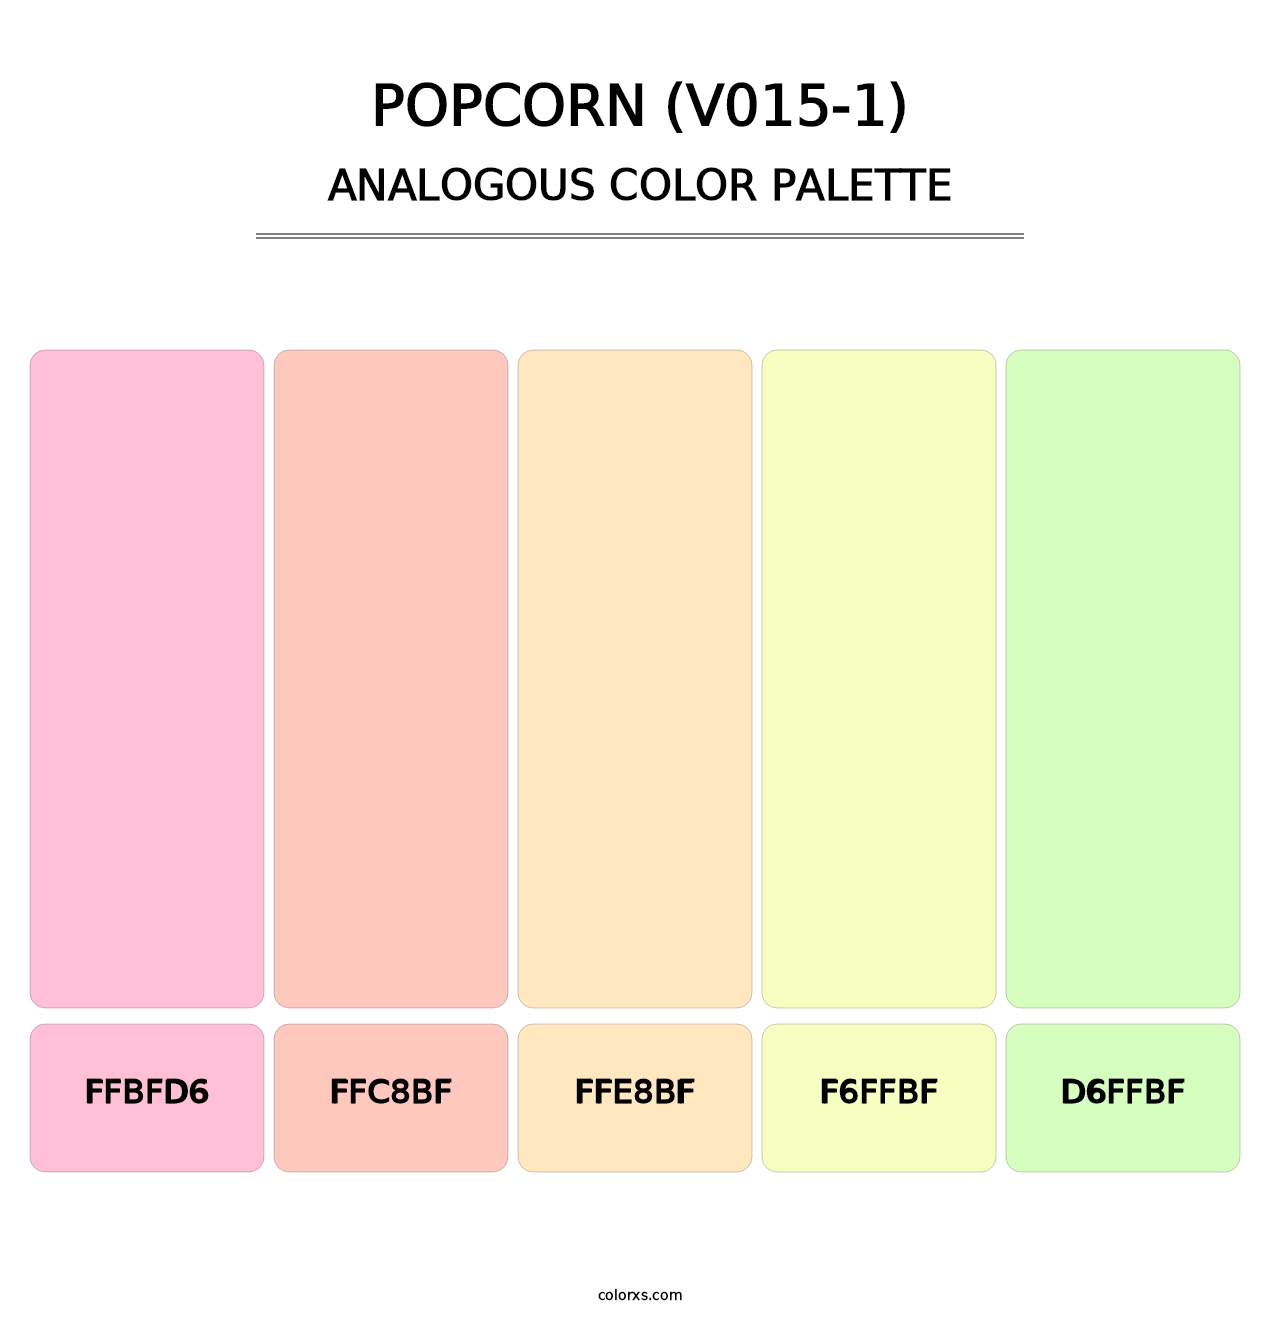 Popcorn (V015-1) - Analogous Color Palette